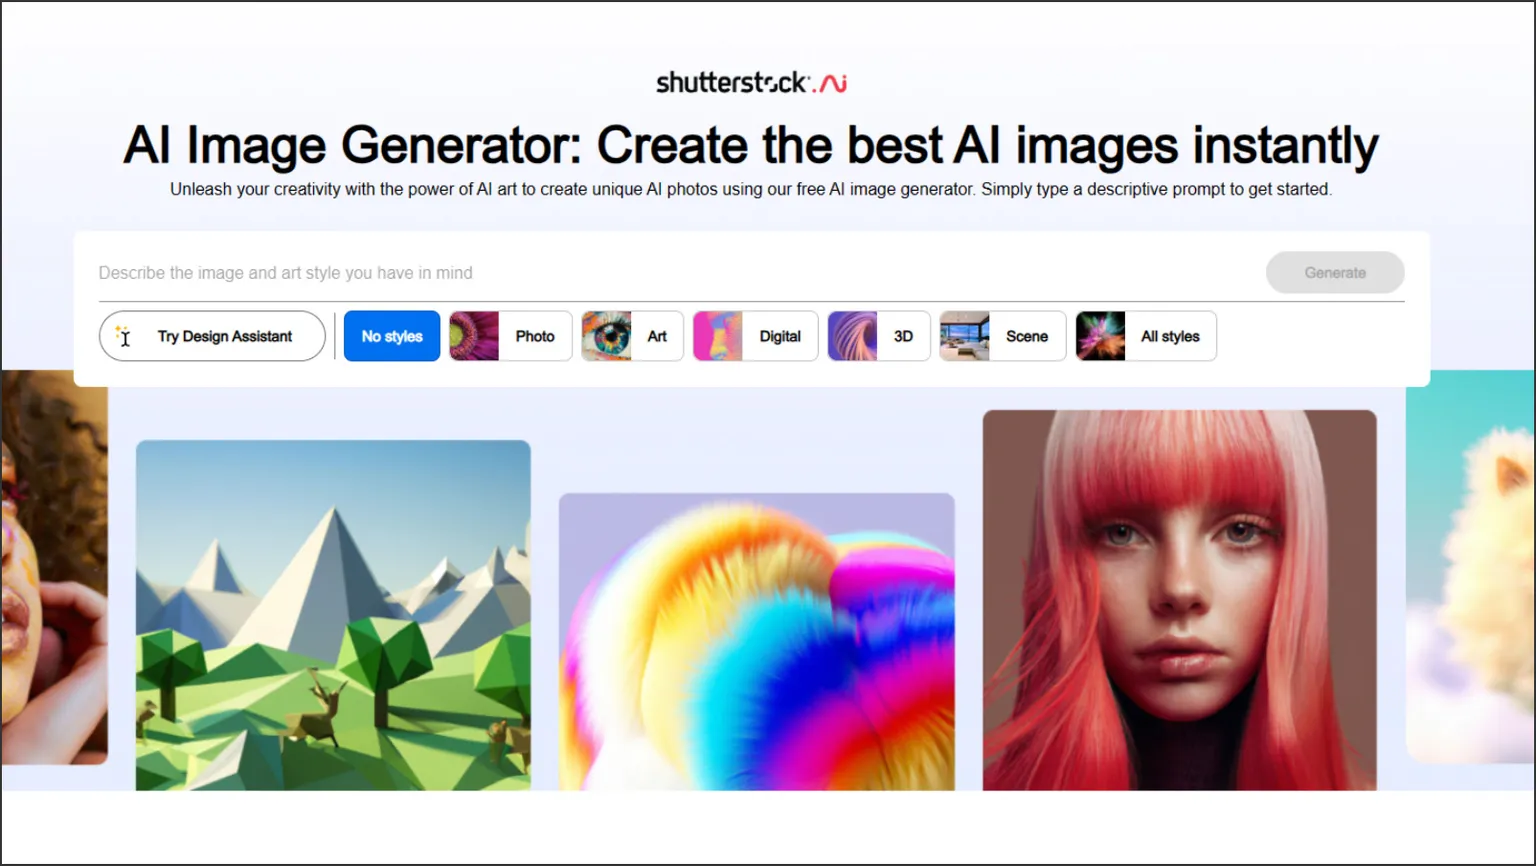 Shutterstock AI Image Generator